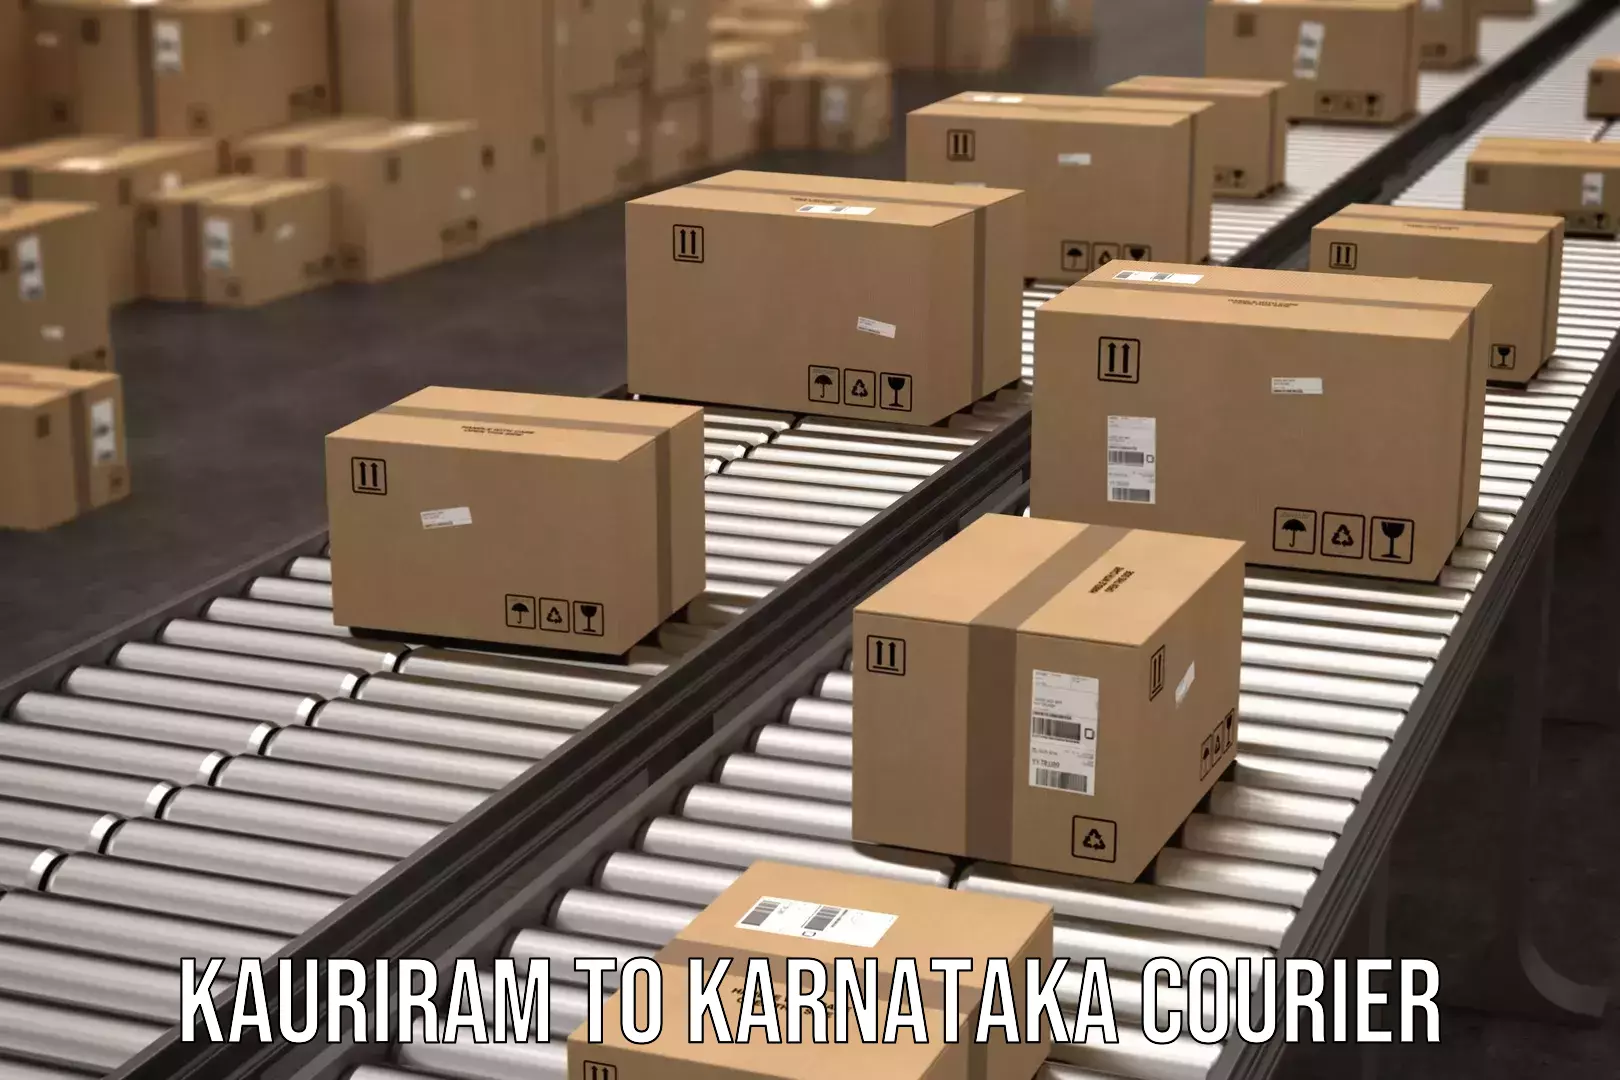 24/7 courier service Kauriram to Udupi